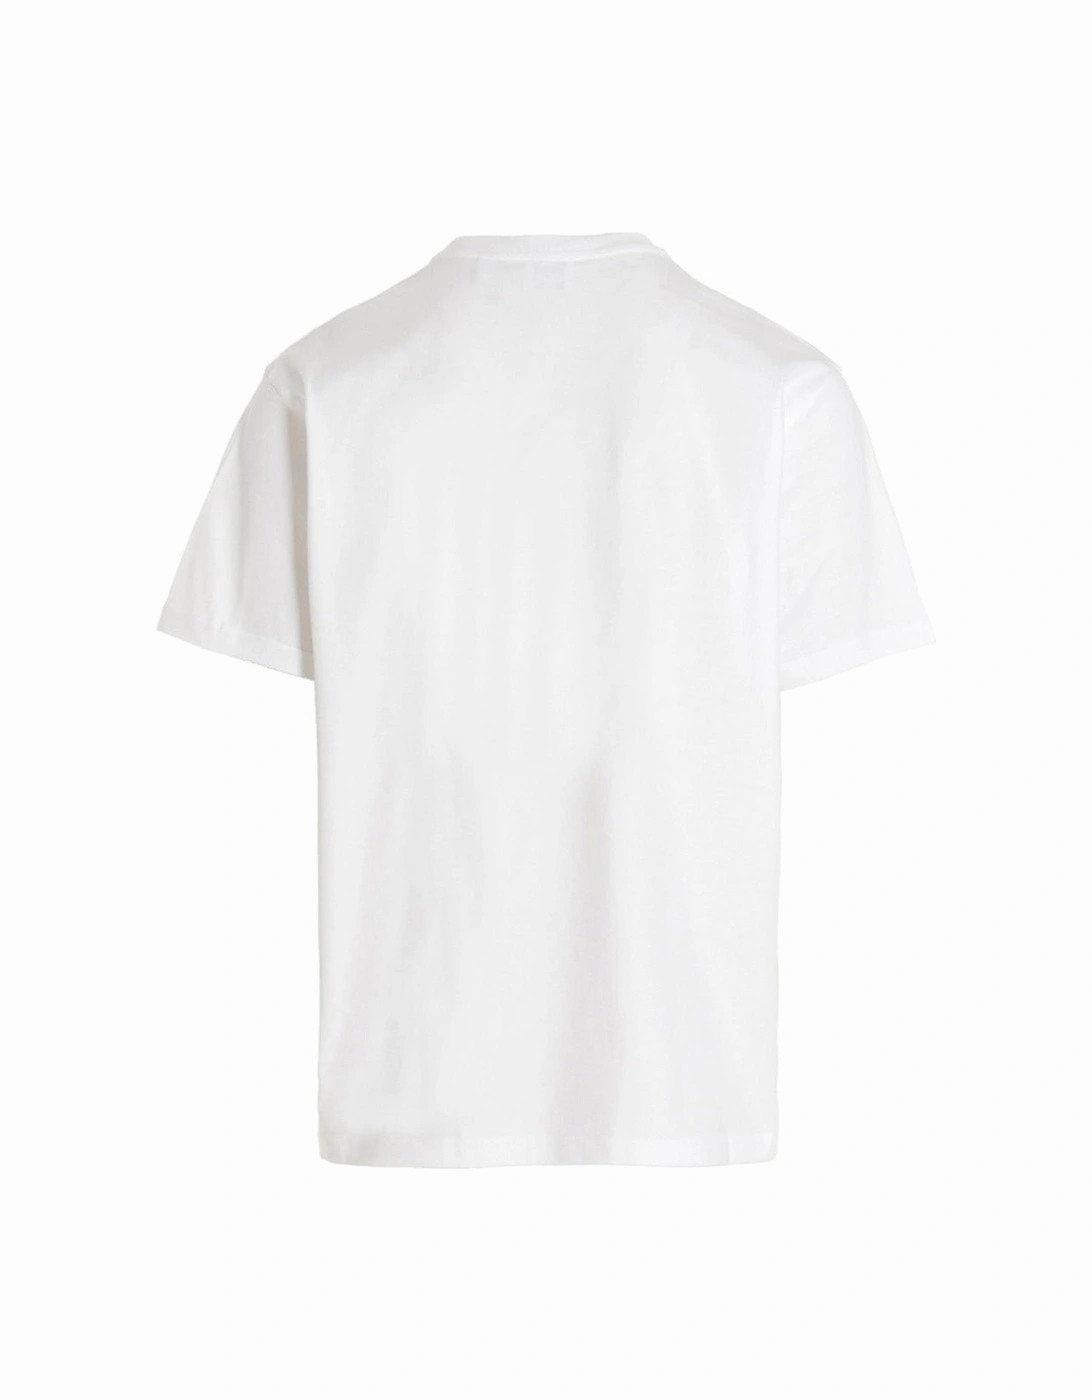 Box Logo White T-Shirt